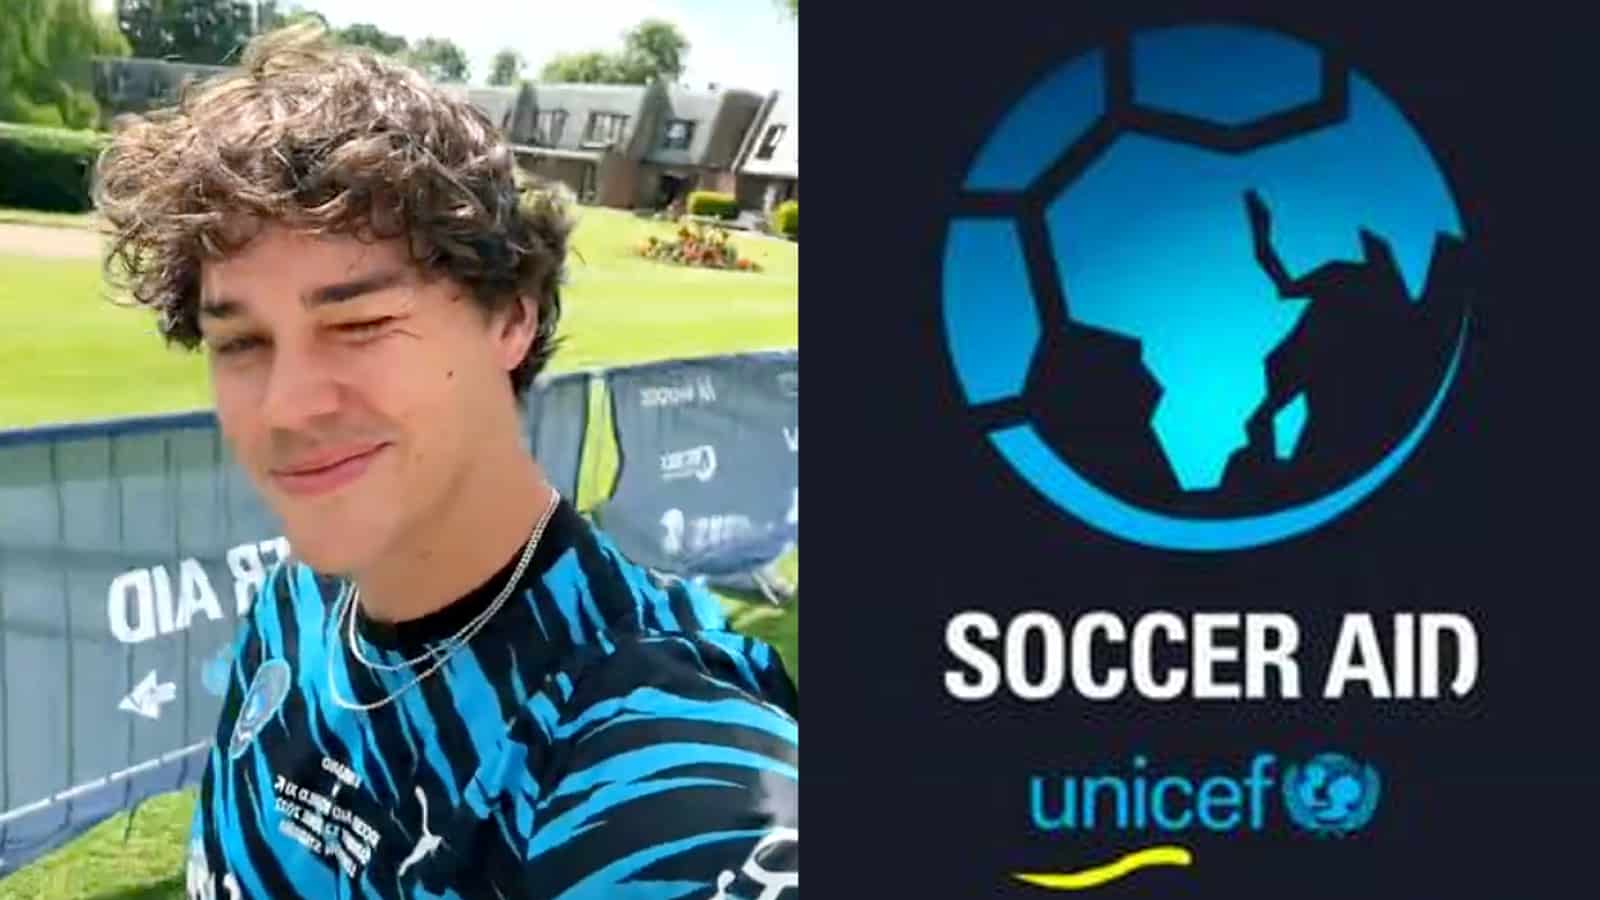 Noah Beck next to the Soccer Aid logo